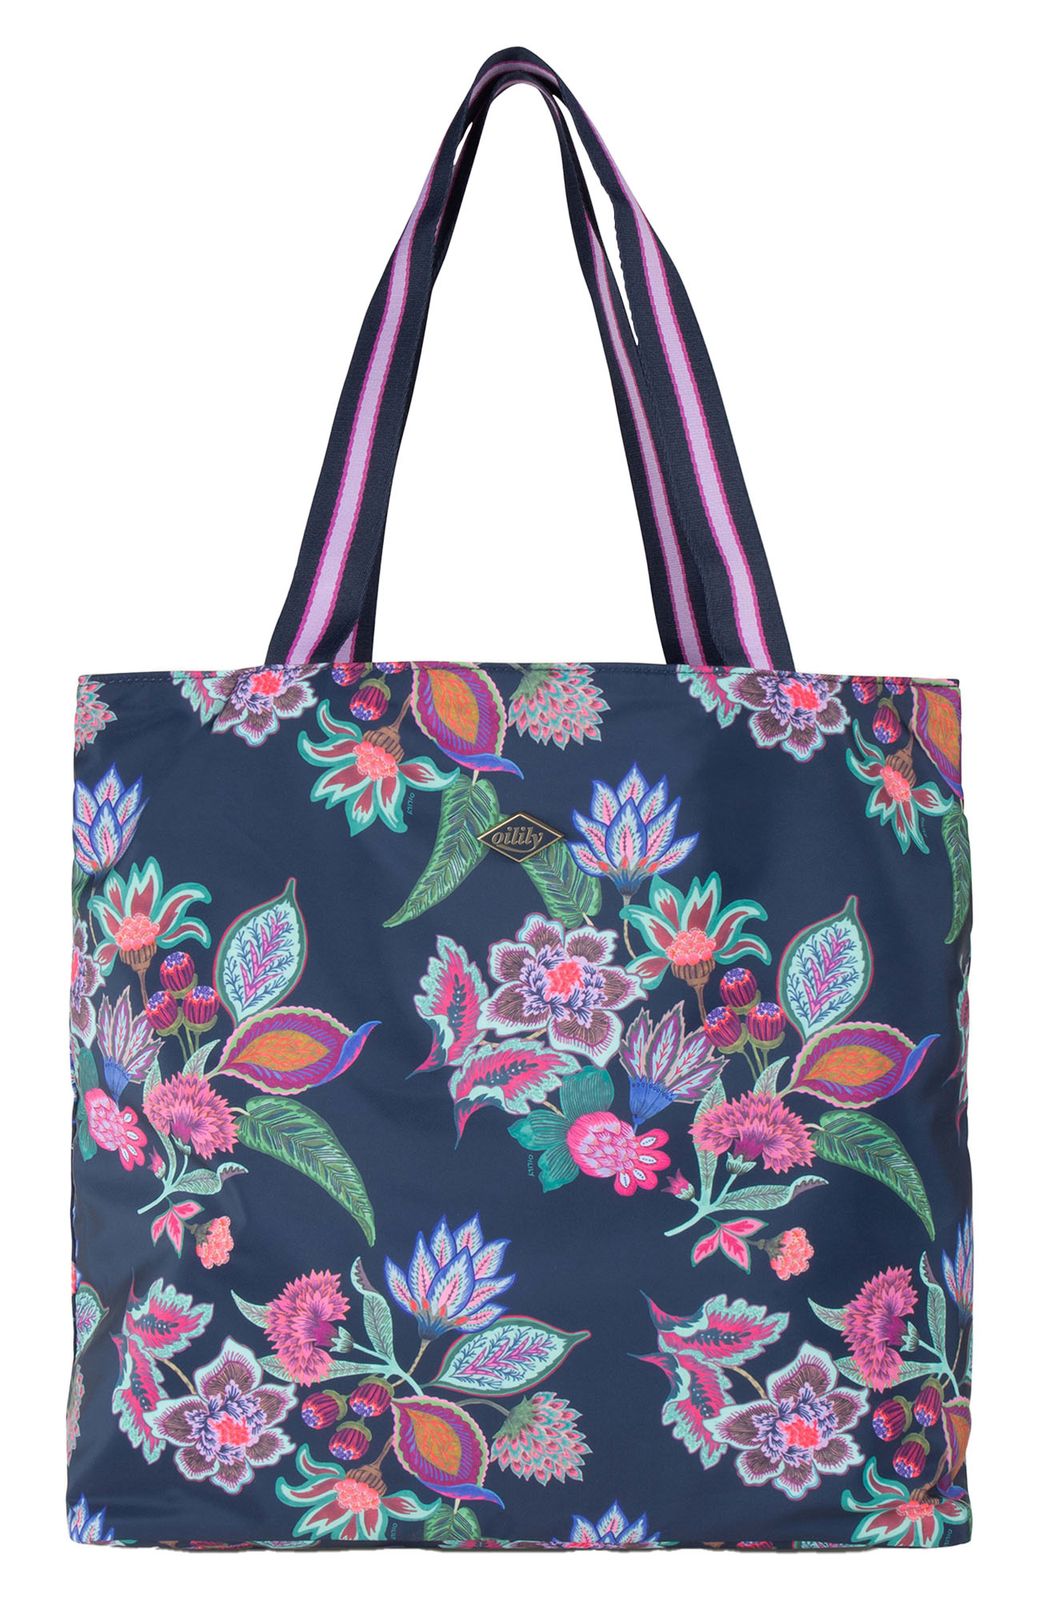 Oilily shopper bag Sonate Blue Iris-Walnut | Buy bags, purses ...